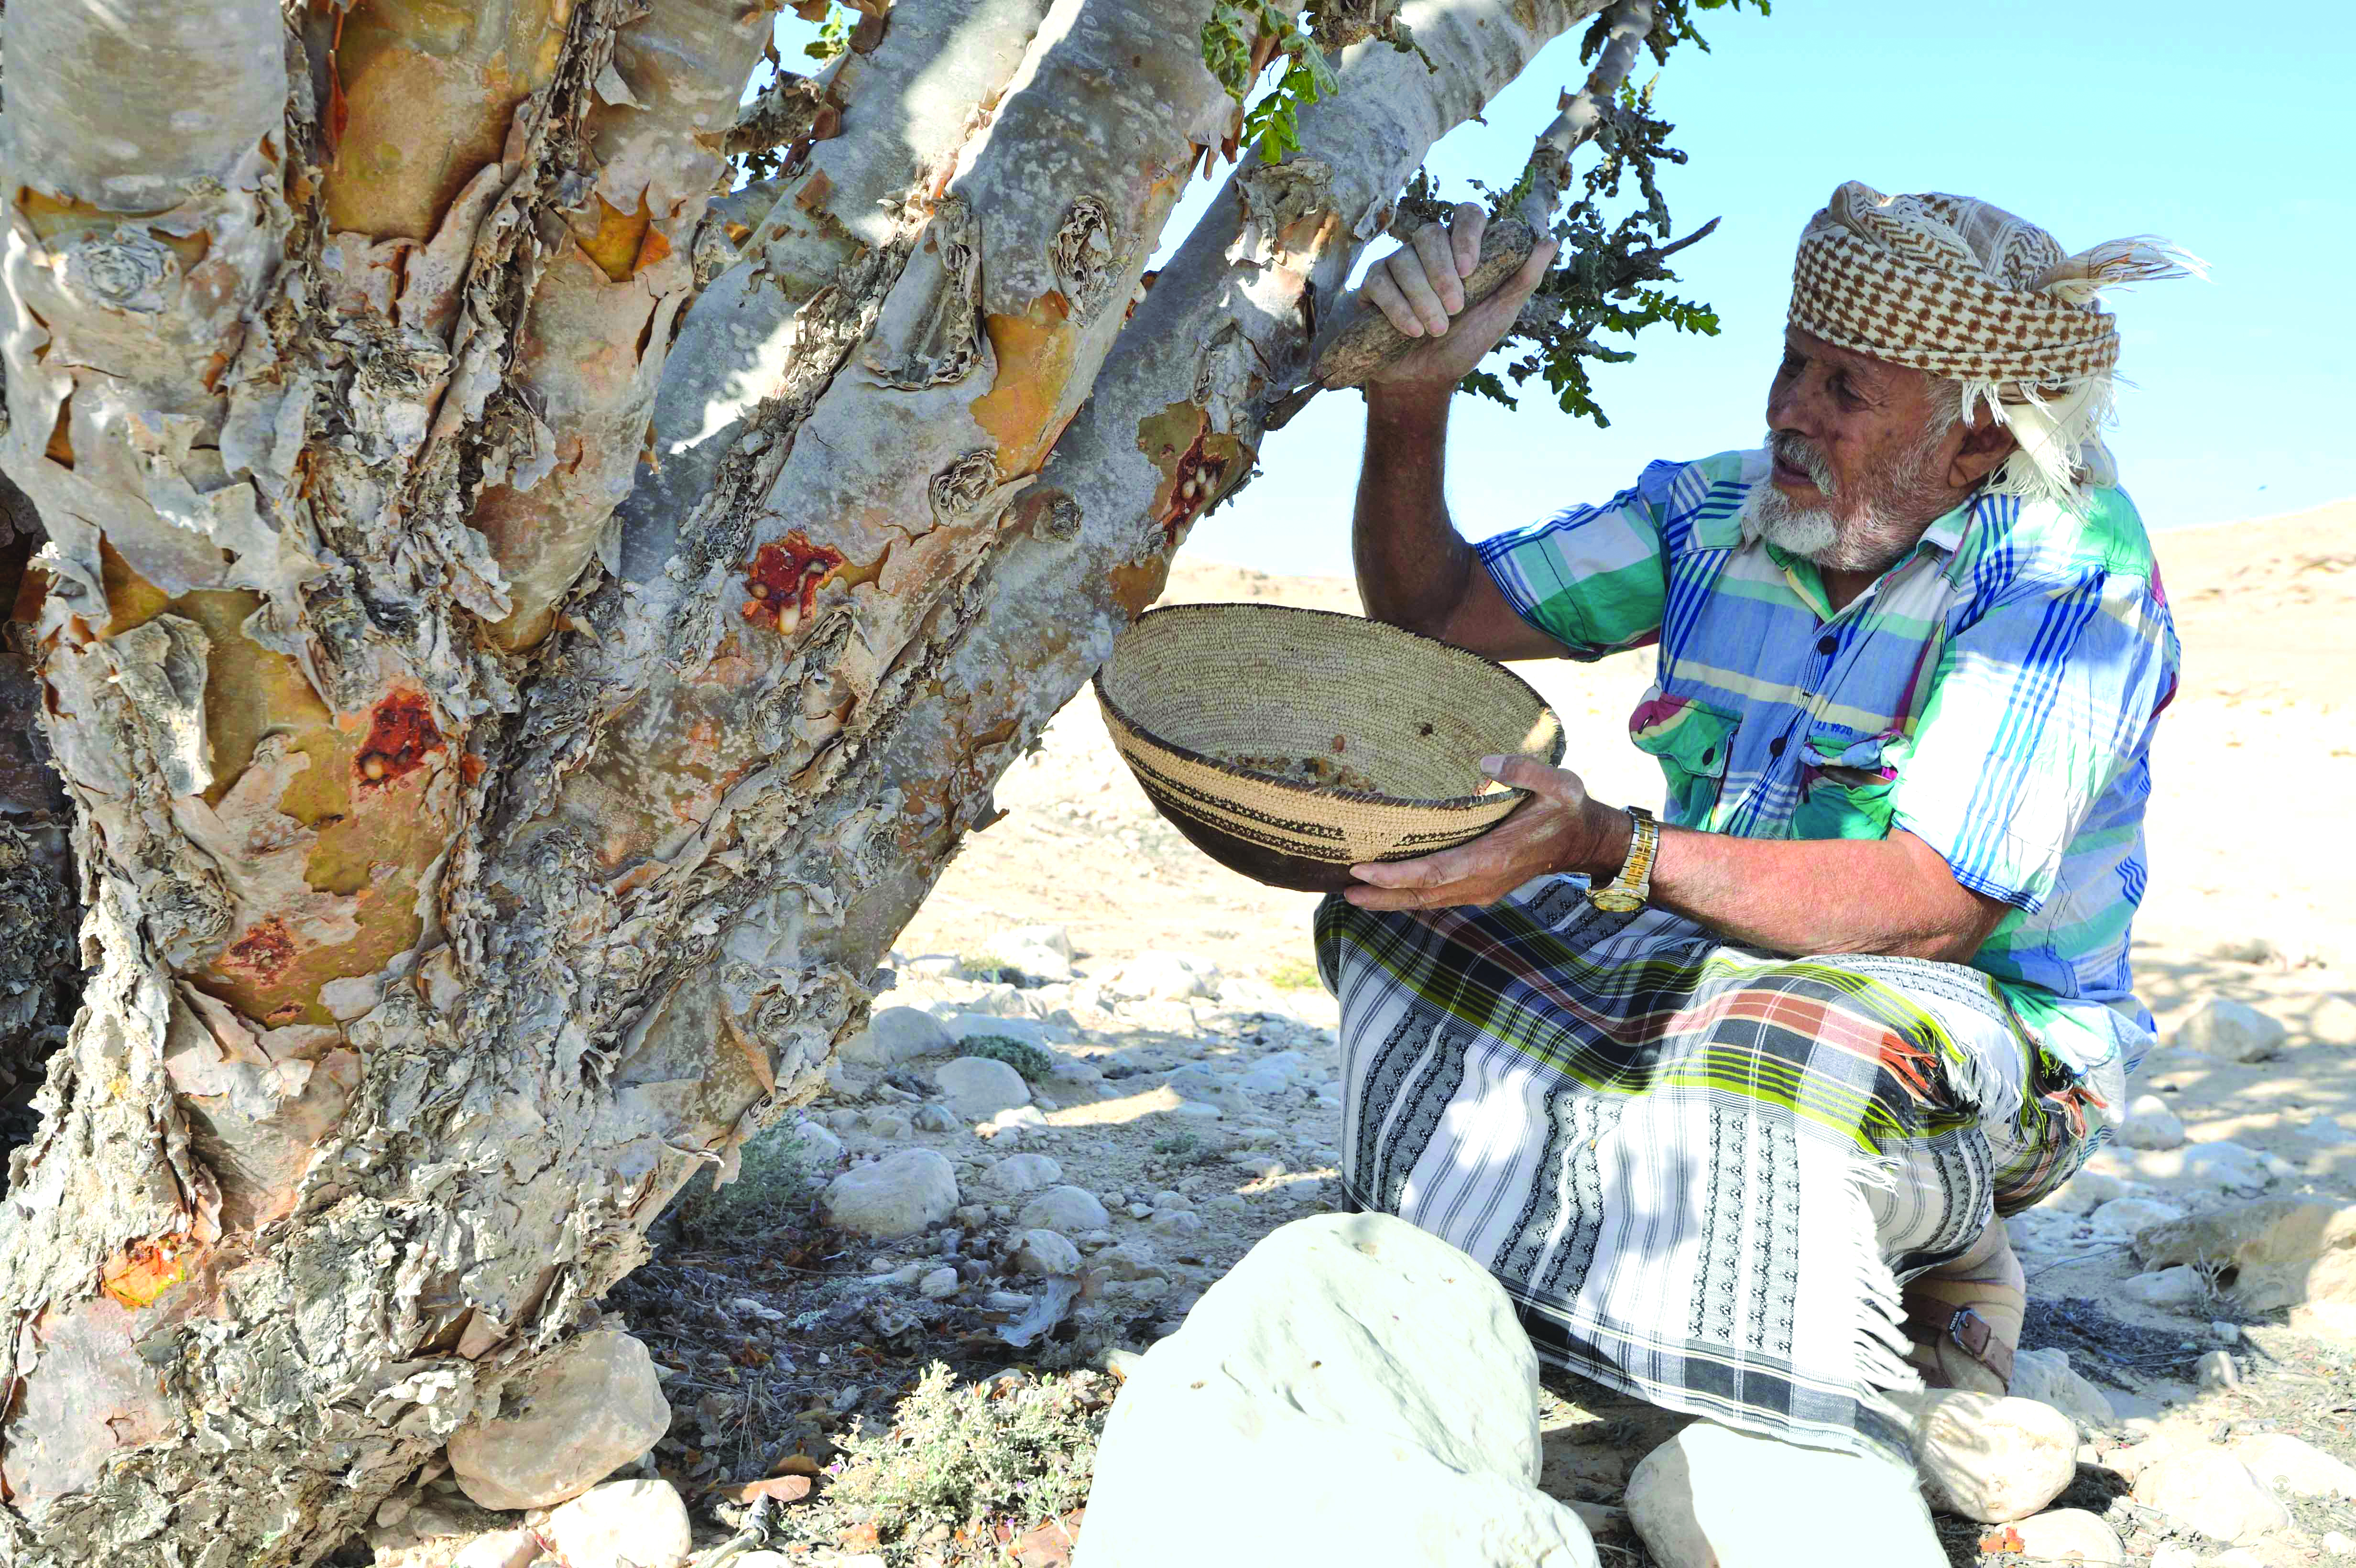 Oman tourism: More than 109,000 tourists visit Frankincense Land Site